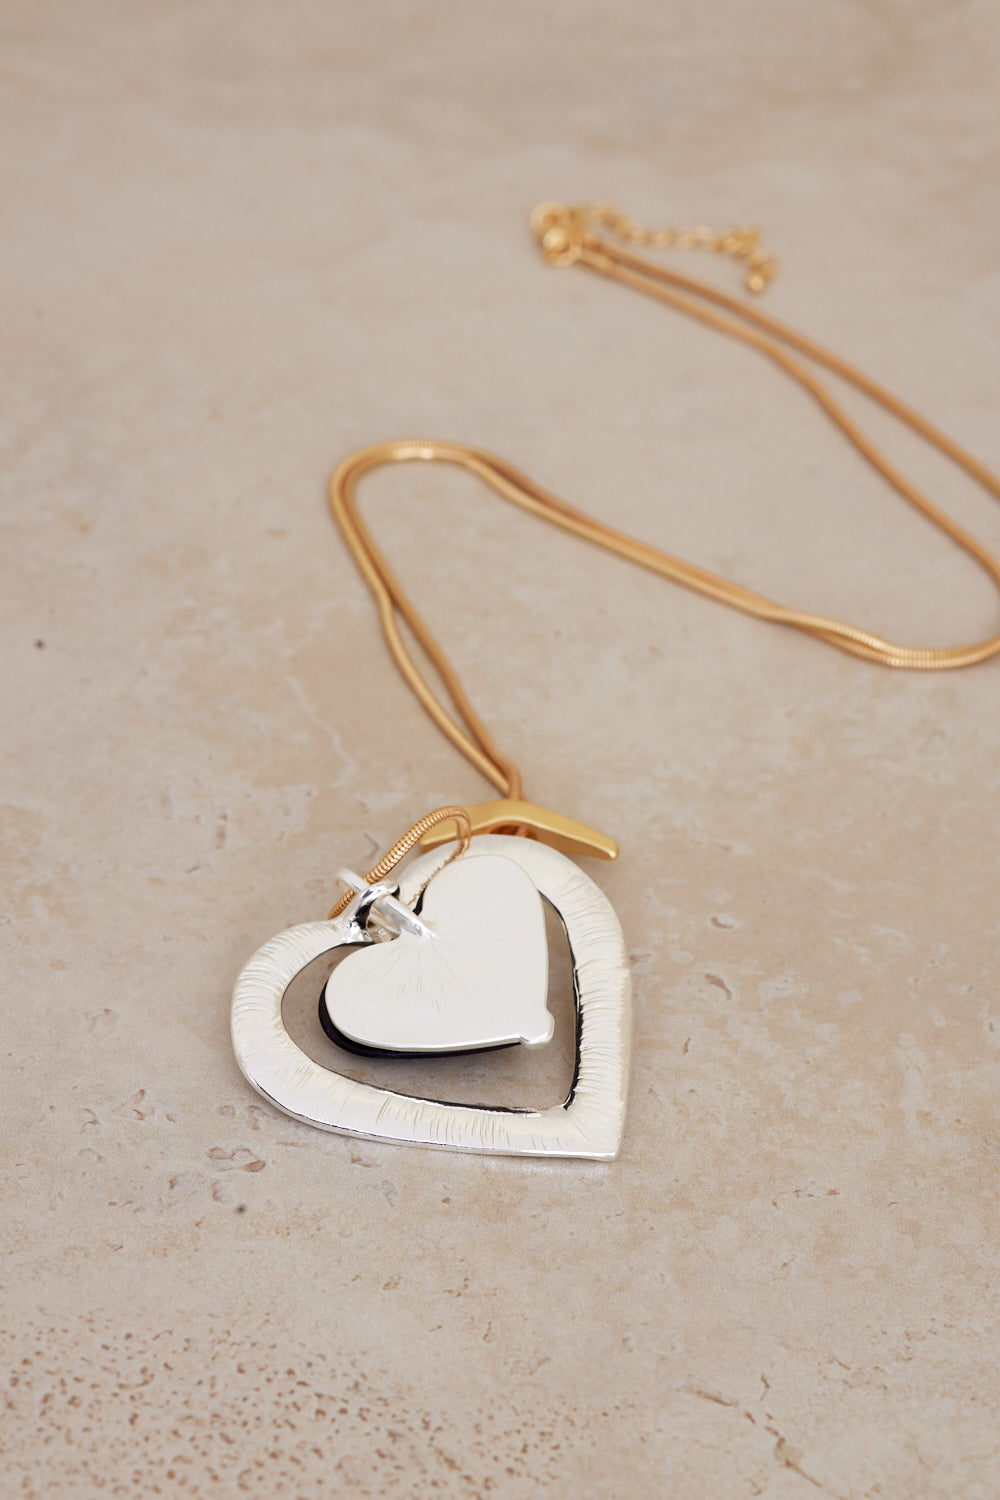 Harmony Heart Pendant Necklace